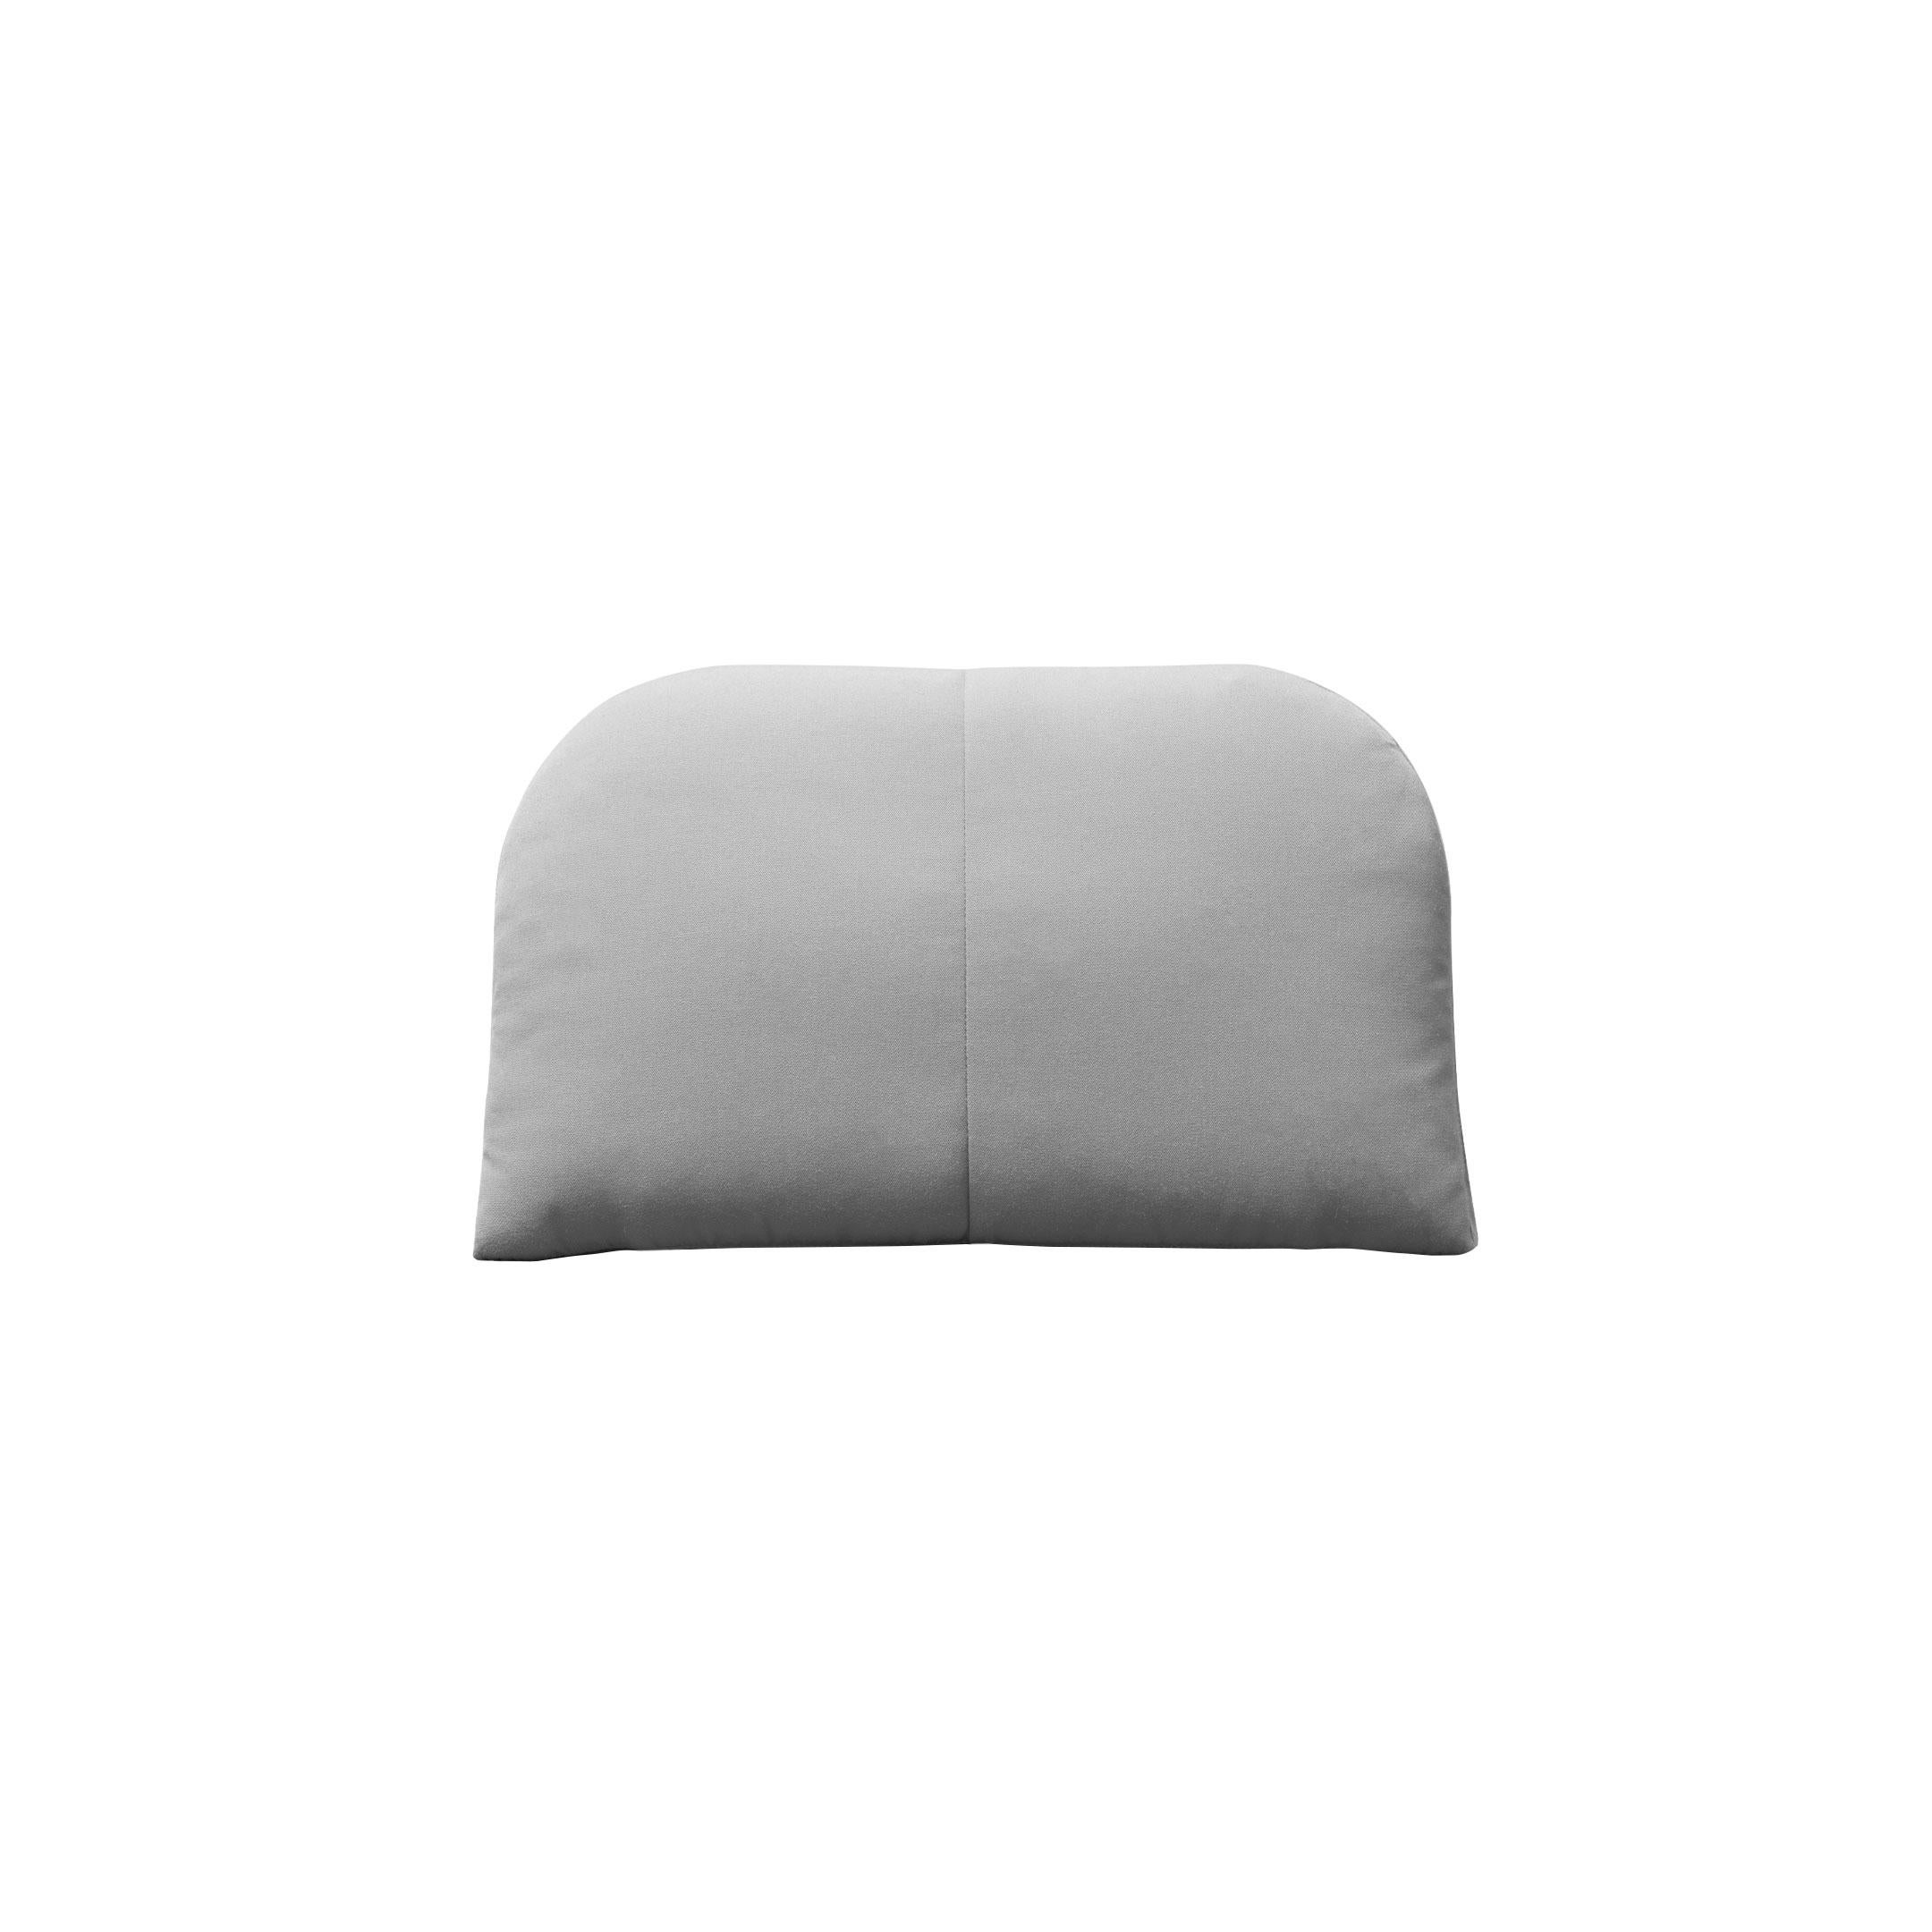 Woven Bend Goods - Arc Throw Pillow in Black Sunbrella For Sale